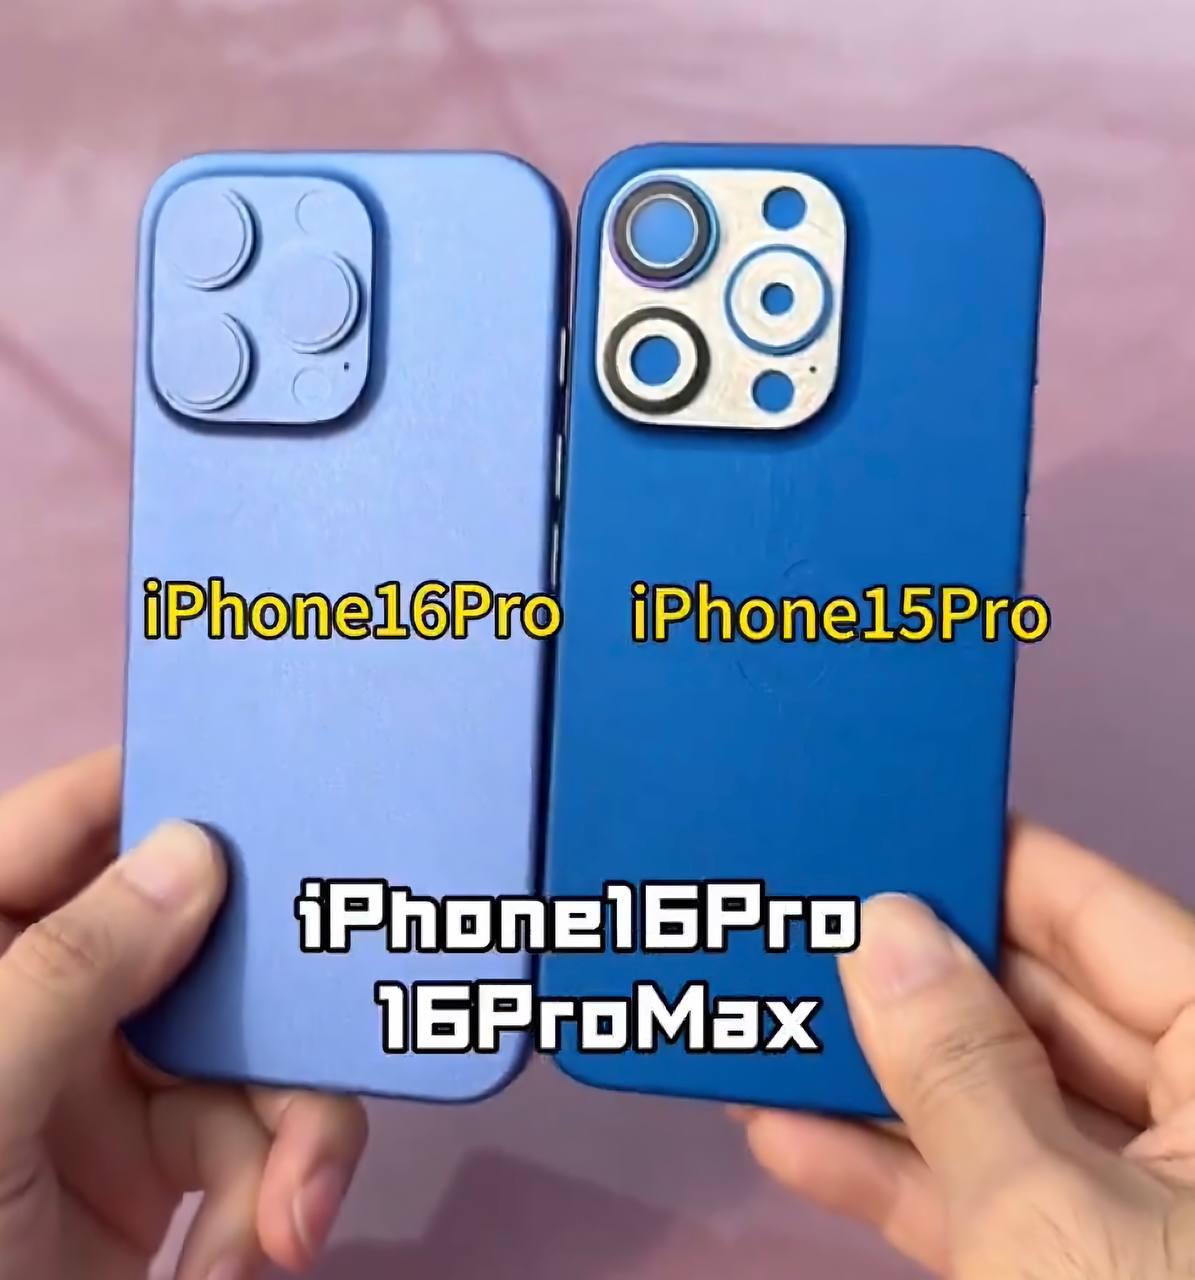 Он сравнил мокапы iPhone 16 Pro с iPhone 15 Pro и iPhone 16 с iPhone 15